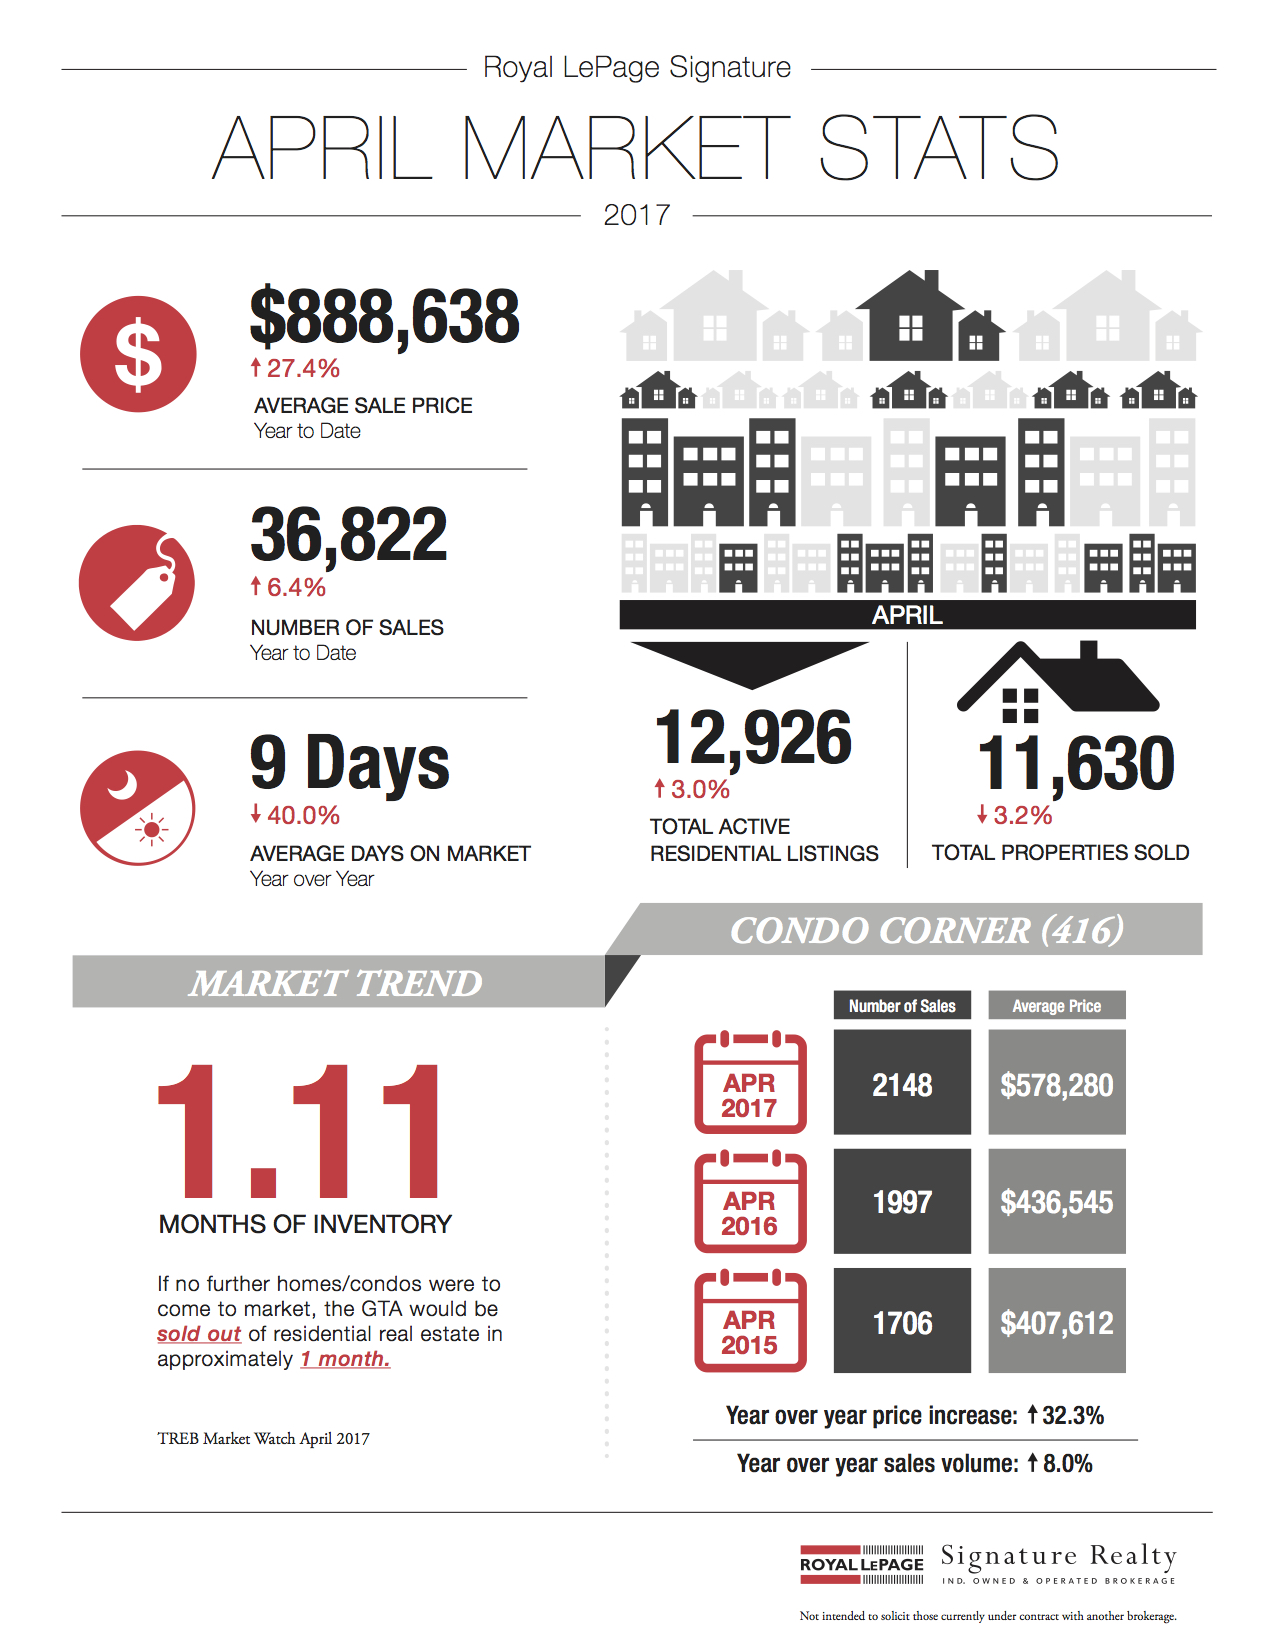 April 2017 Market Stats: Infographic & Report Photo